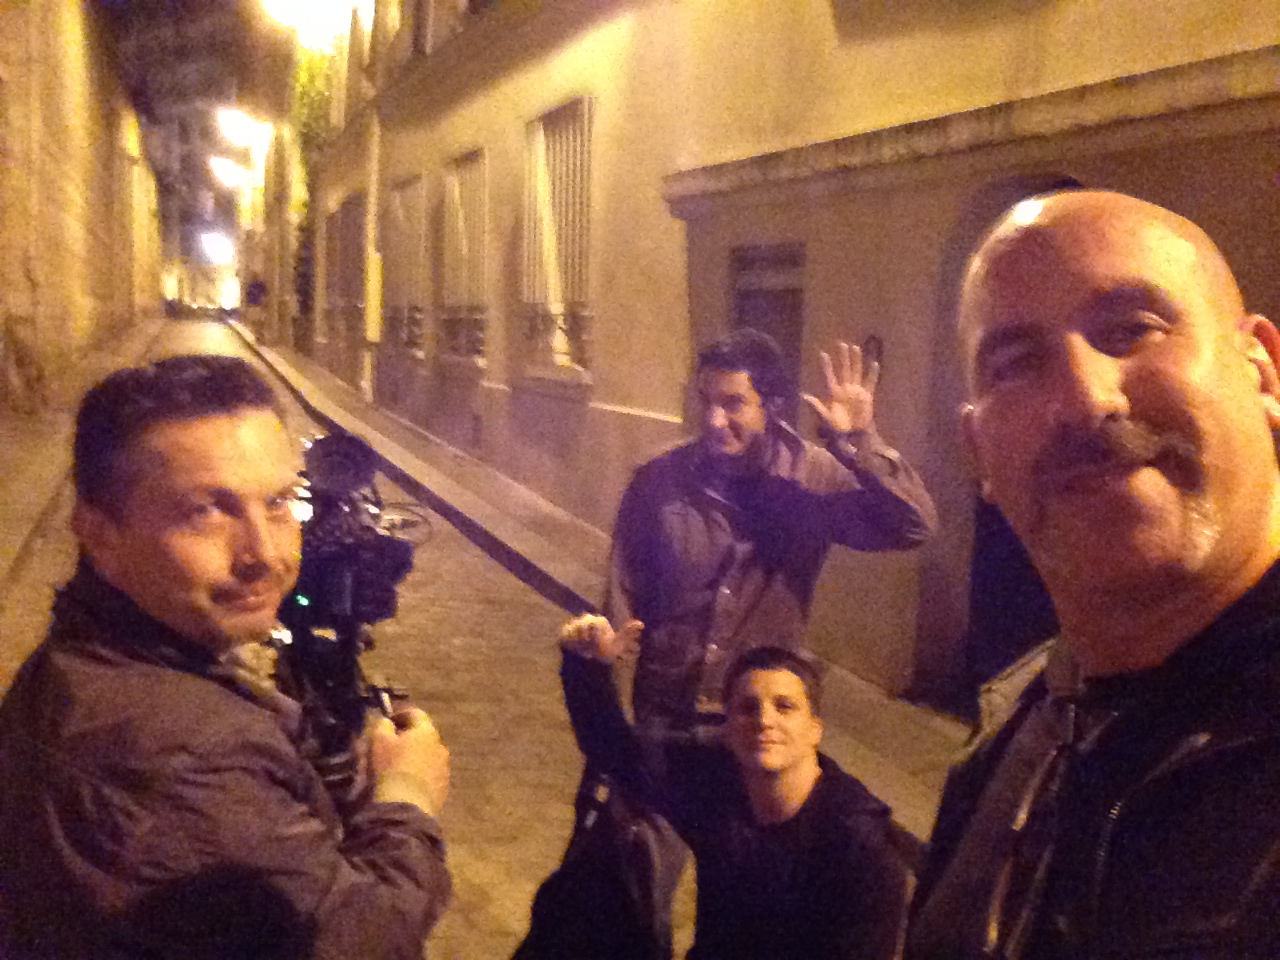 Shooting the film 16 RUE DESCARTES, in Paris July 2014. Release 2015.